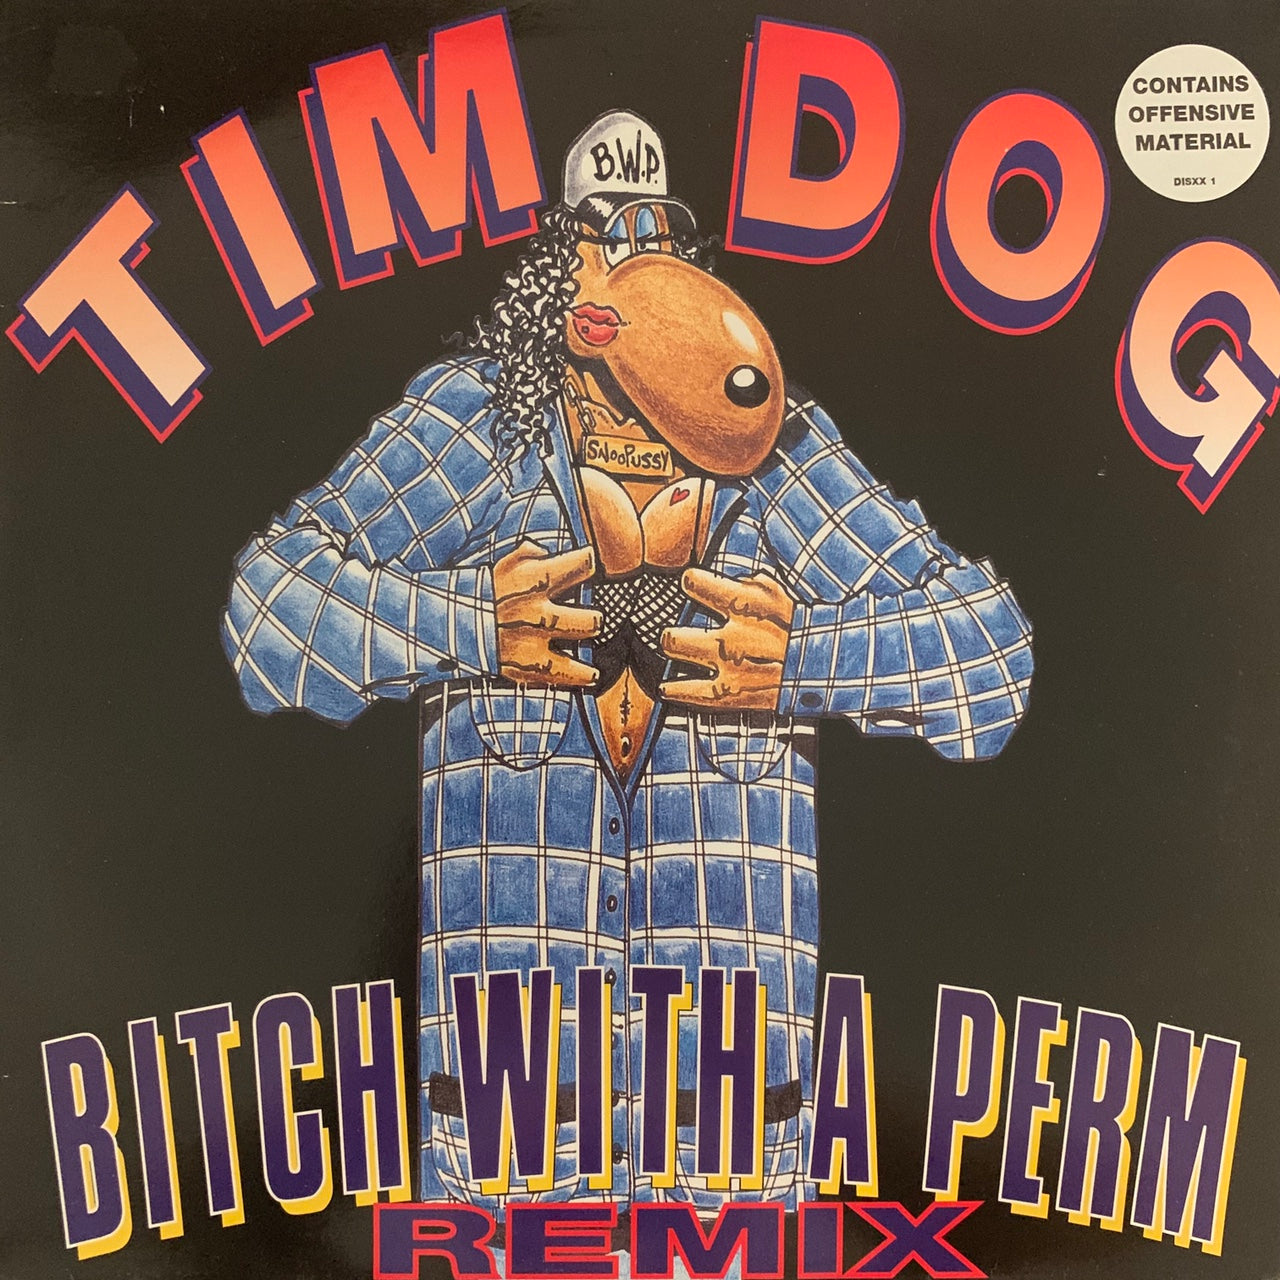 Tim Dog “Bitch With A Perm” 3 Track 12inch Vinyl